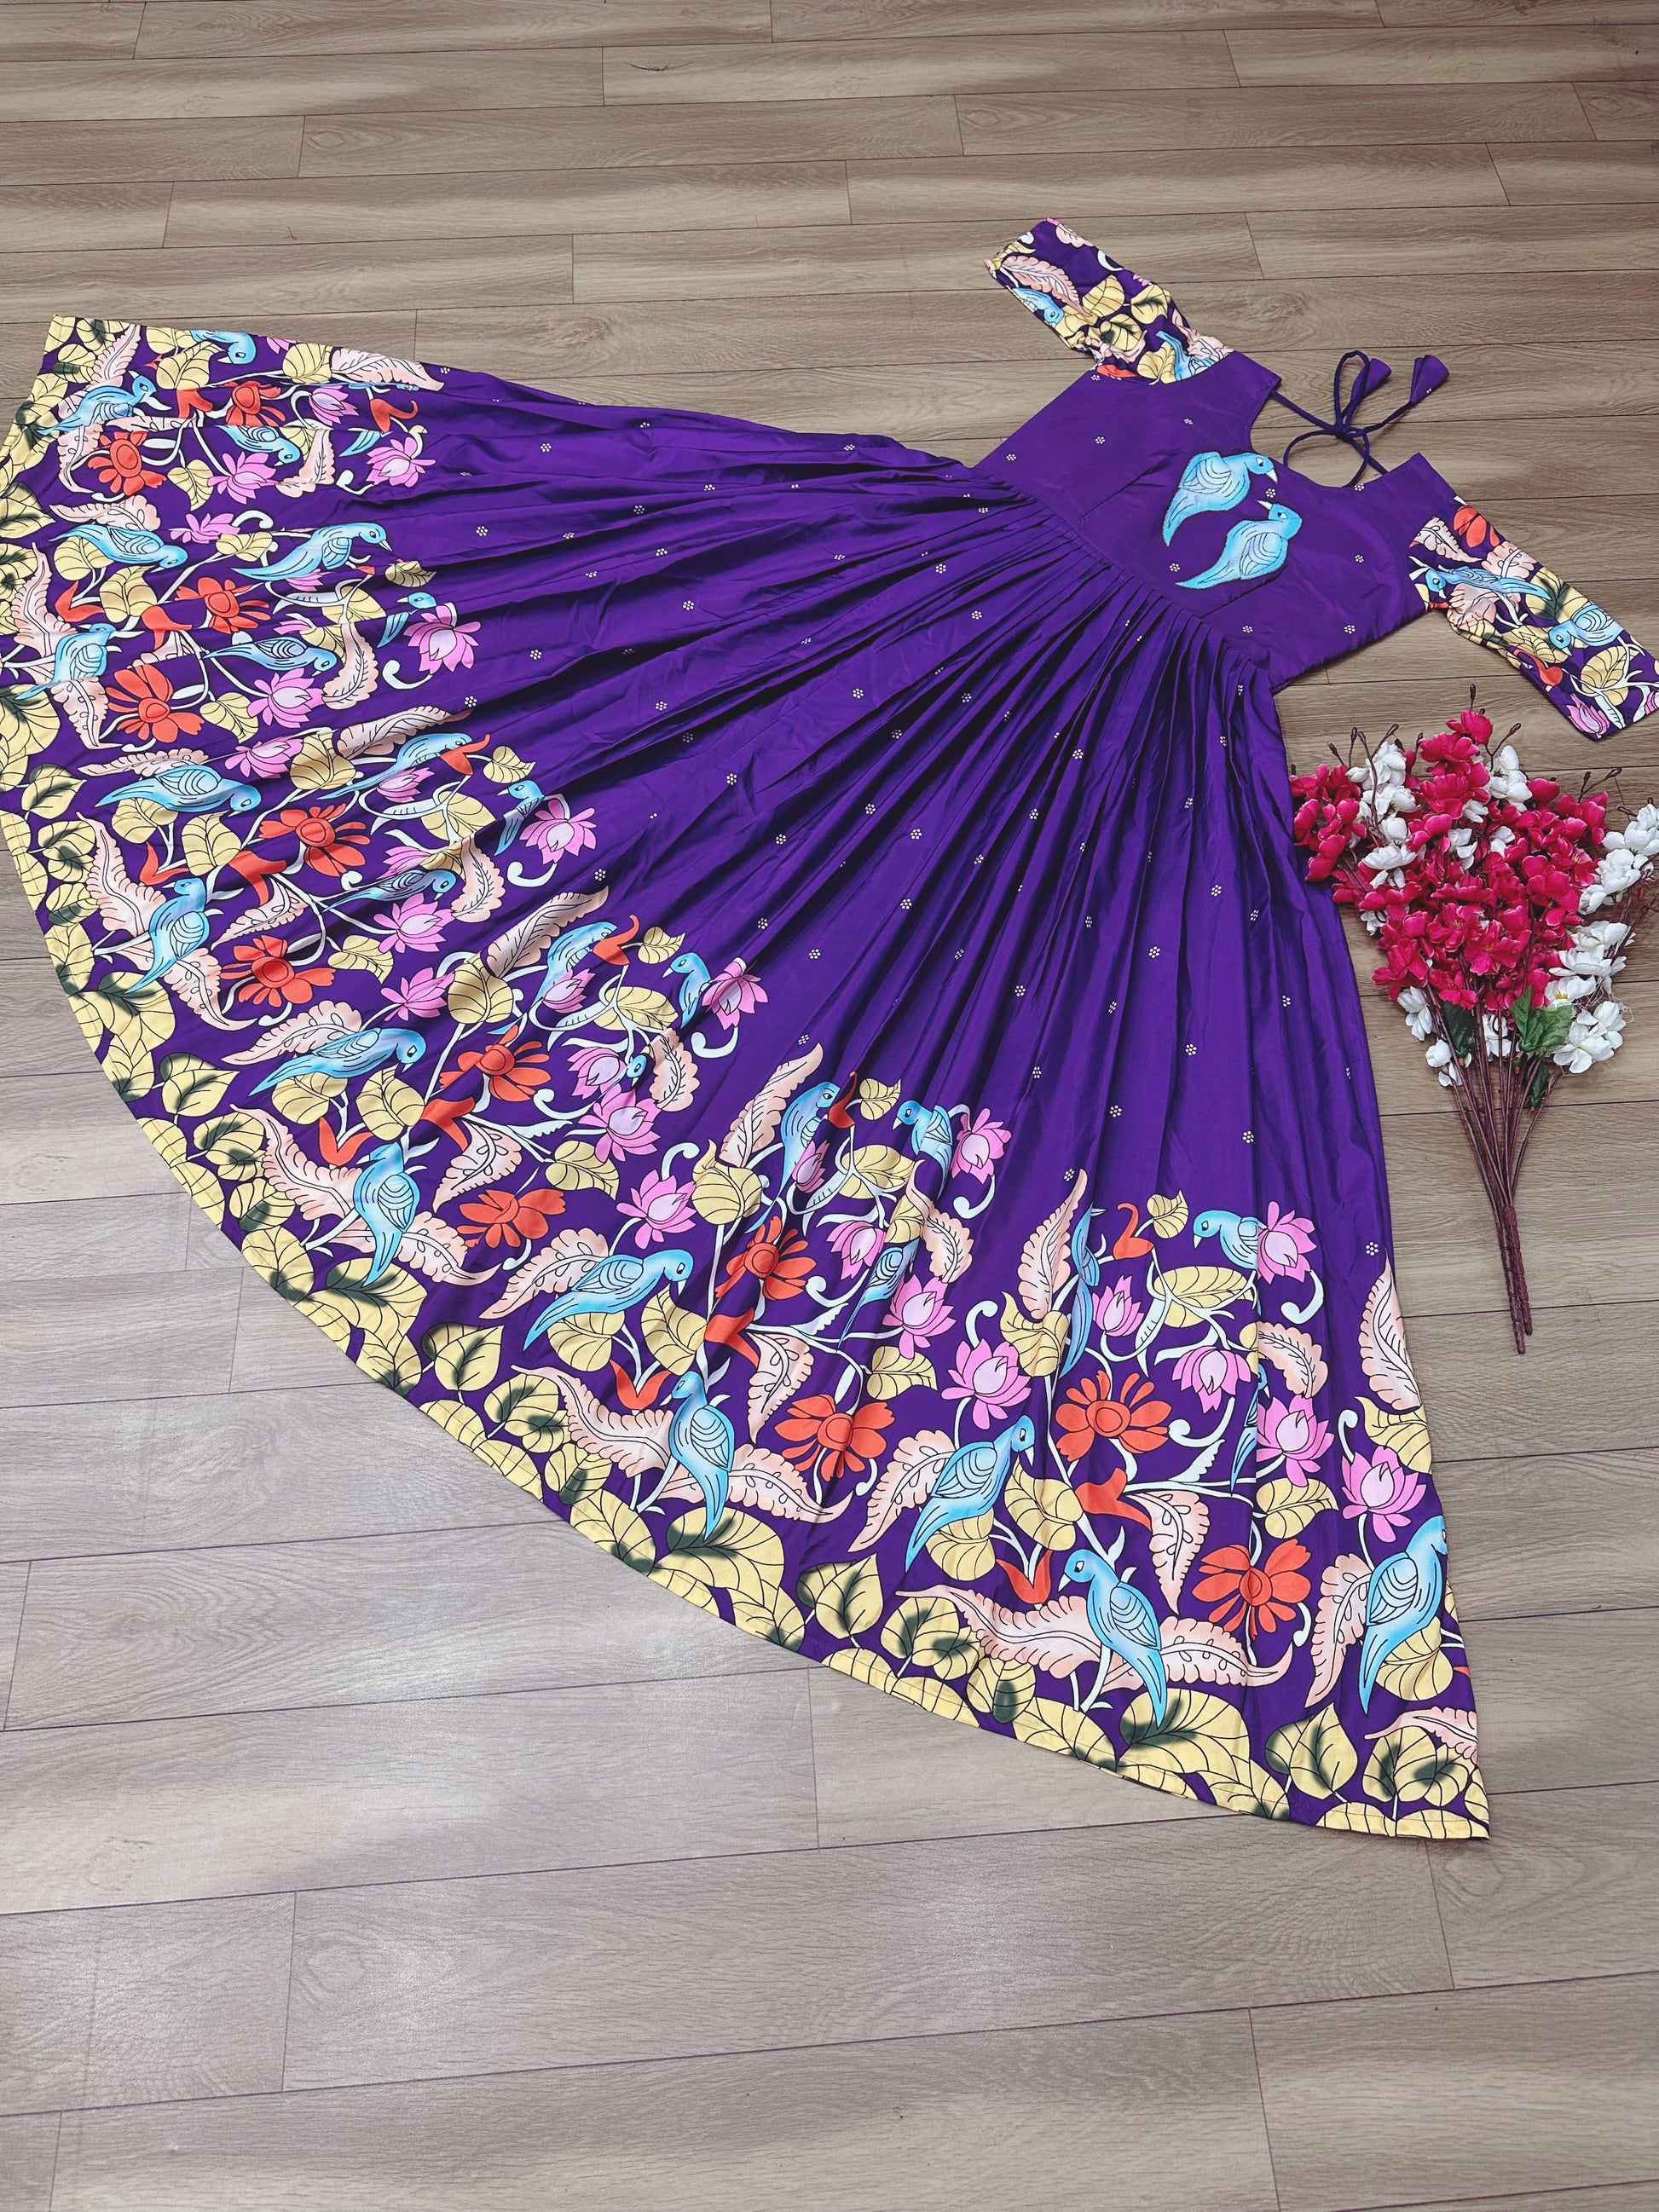 Violet kalamkari cotton dress - THEHANDLOOMPROJECT